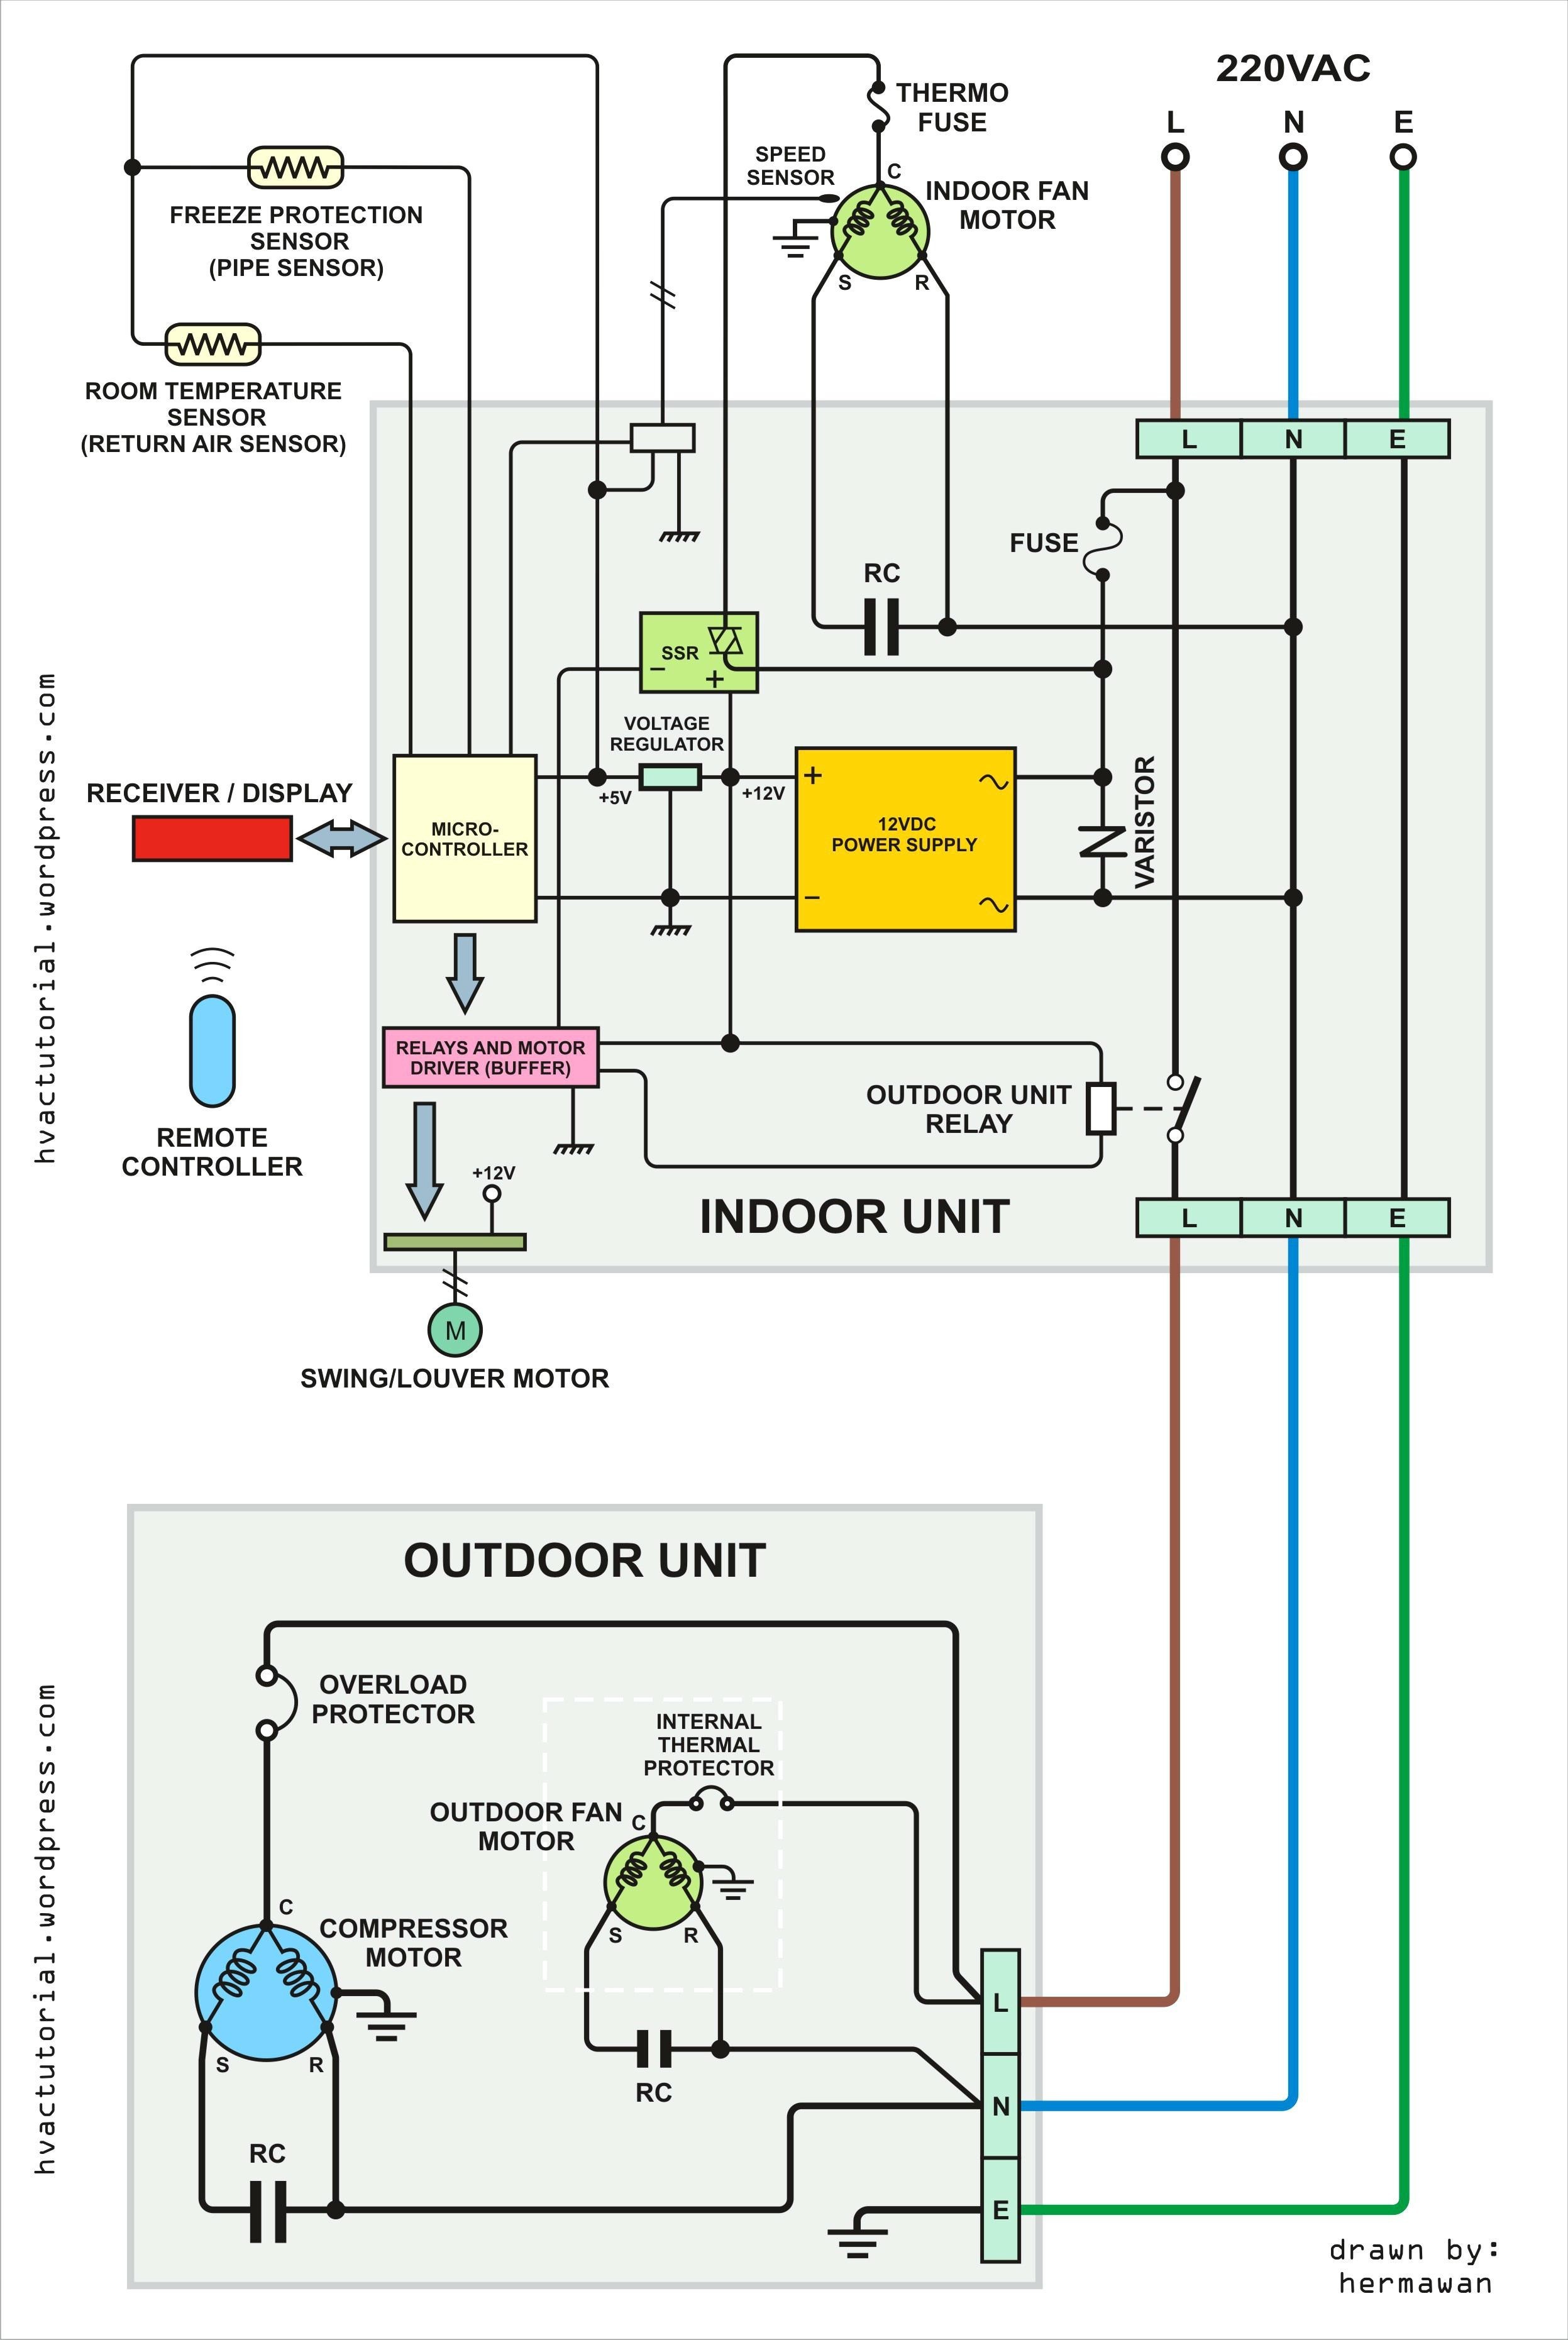 Wiring Diagram Home Generator Valid Home Electrical Wiring Diagrams Diesel Generator Control Panel